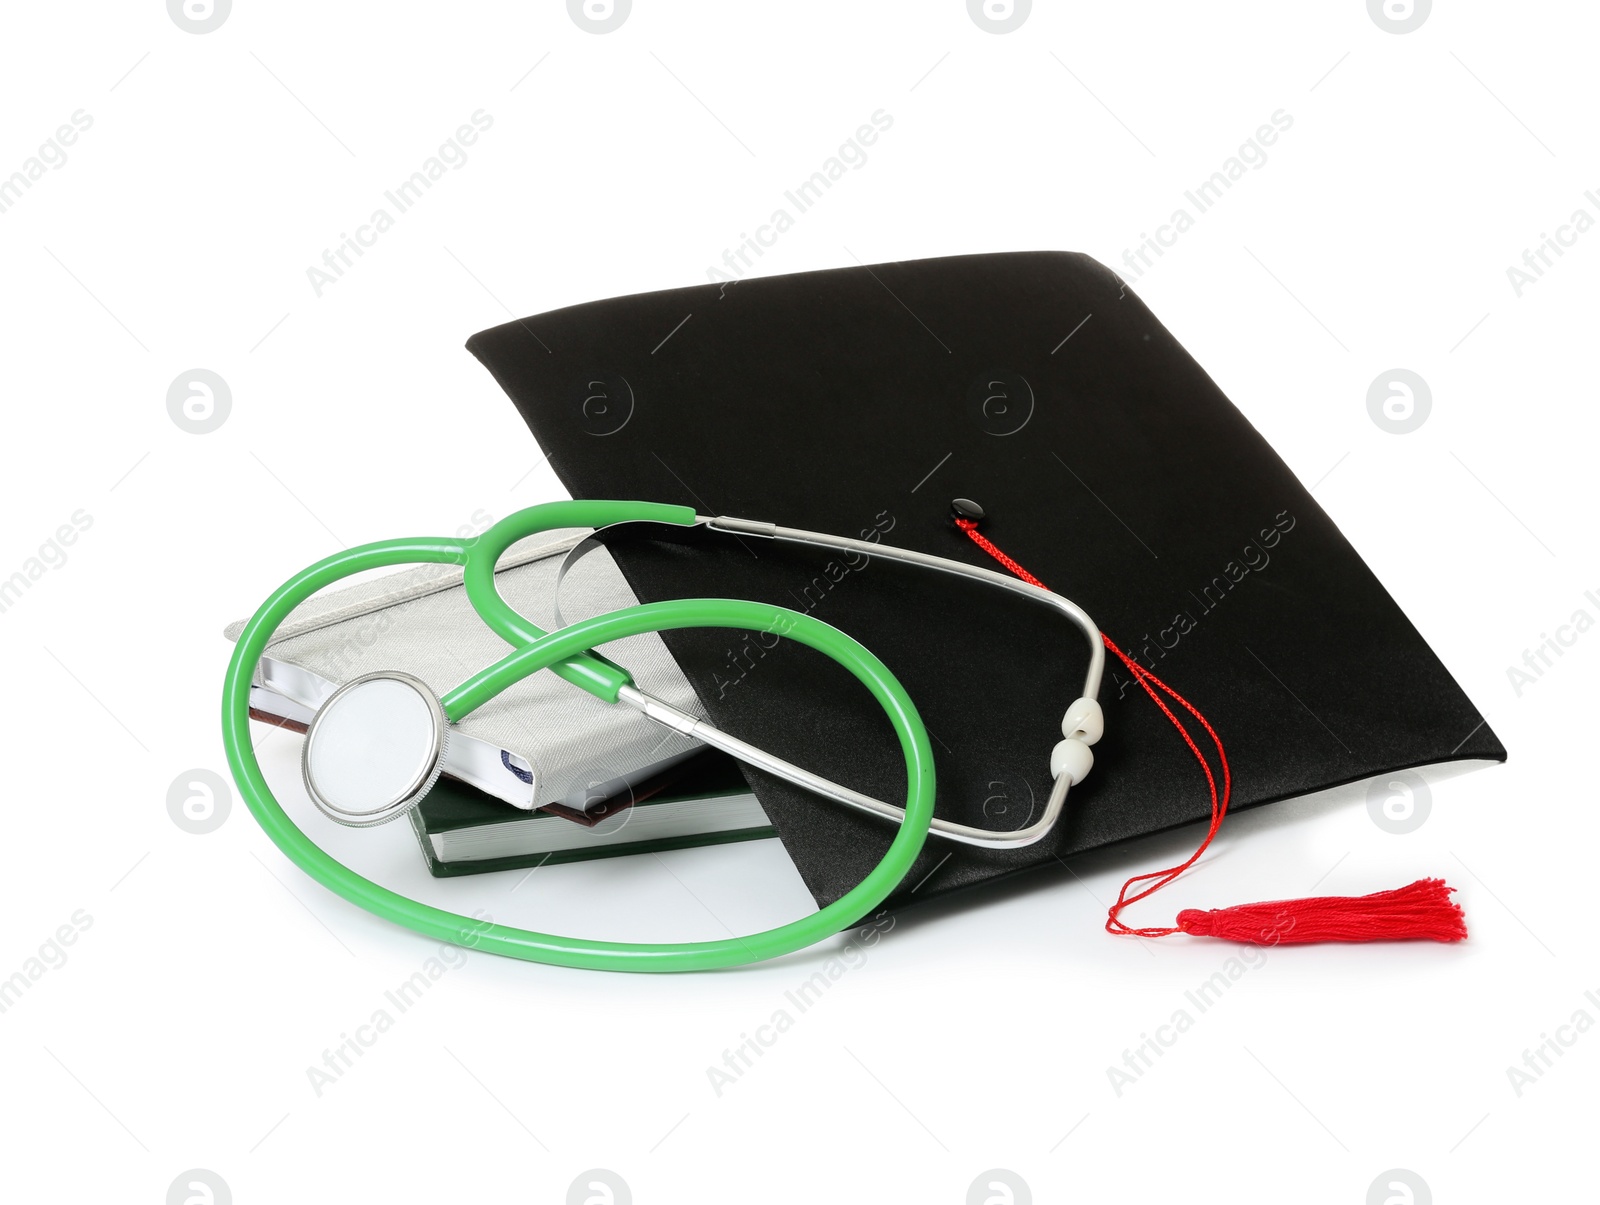 Photo of Stethoscope notebooks and graduation hat on white background. Medical students stuff